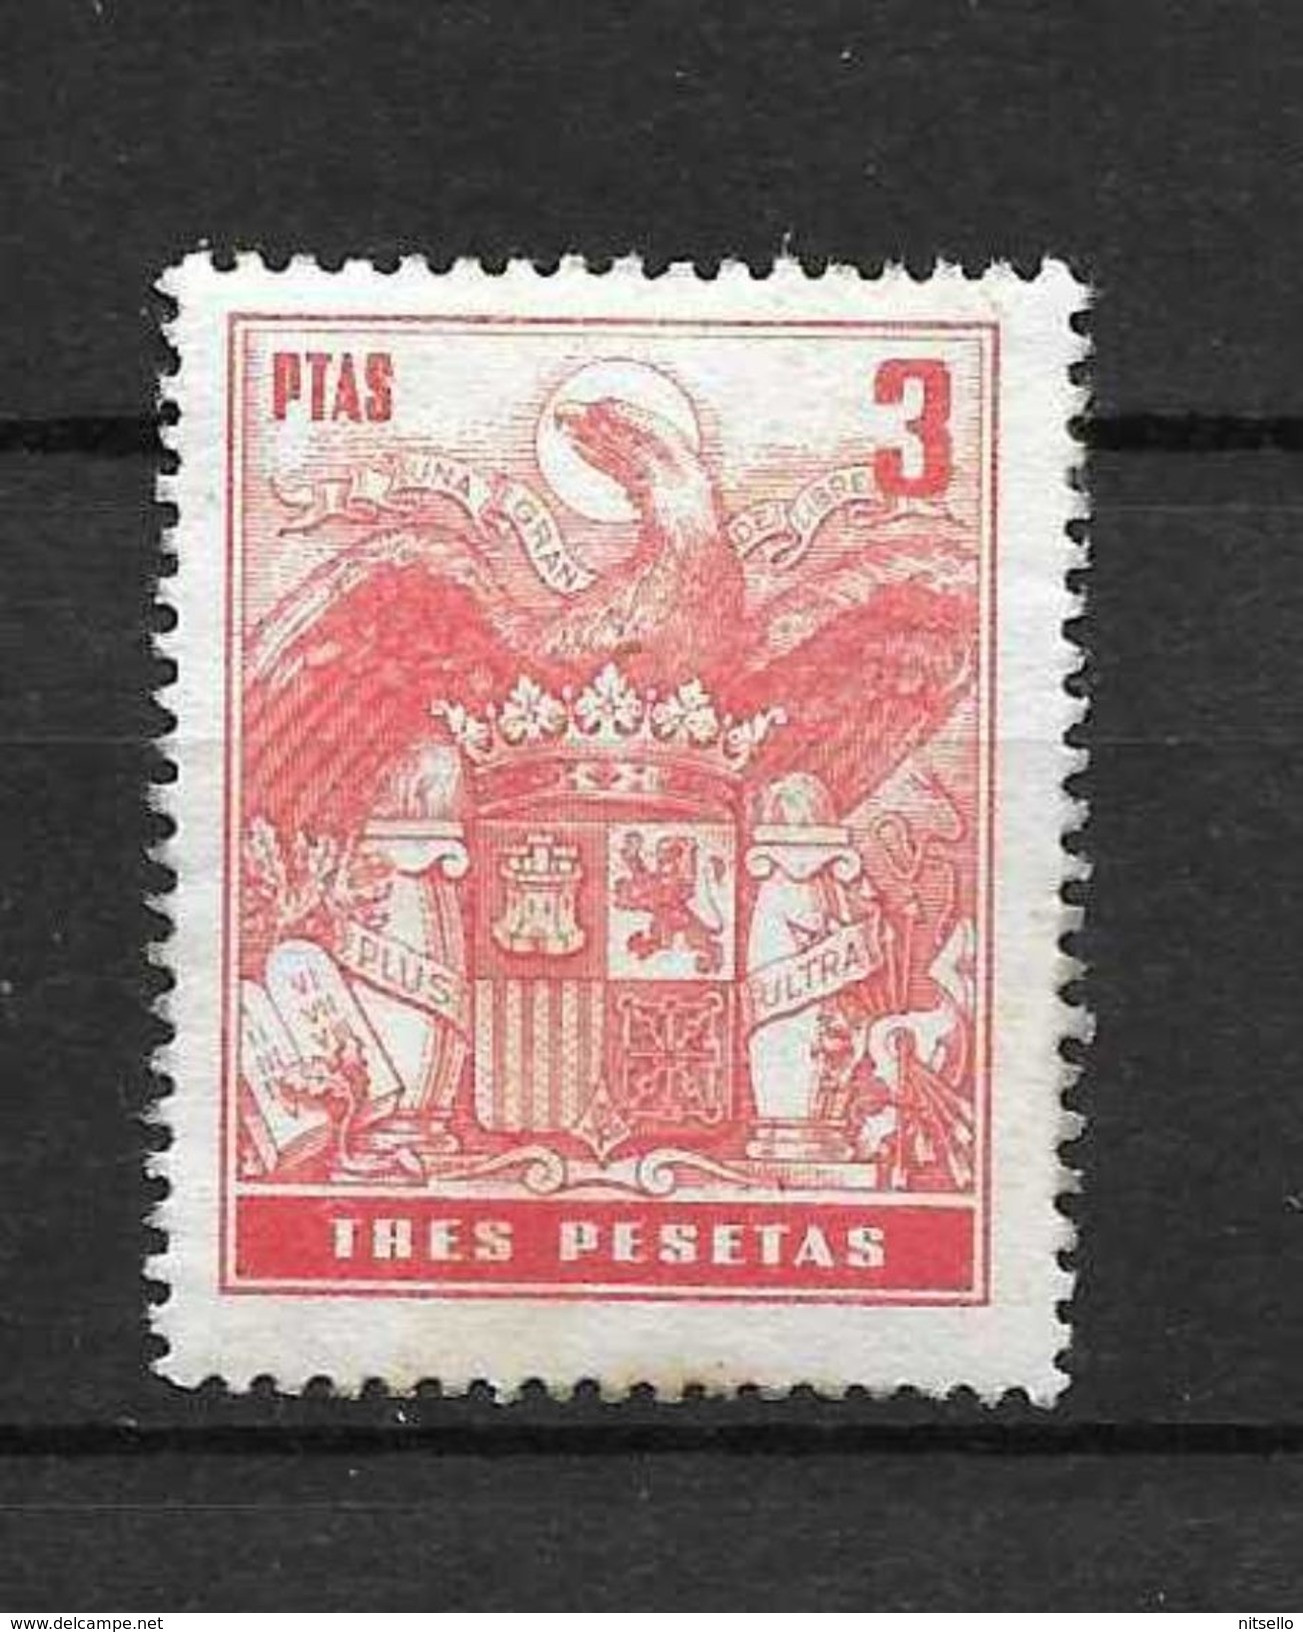 LOTE 1891 D  ///  ESPAÑA  SELLOS FISCALES  -  3 PTAS   SIN GOMA - Fiscale Zegels